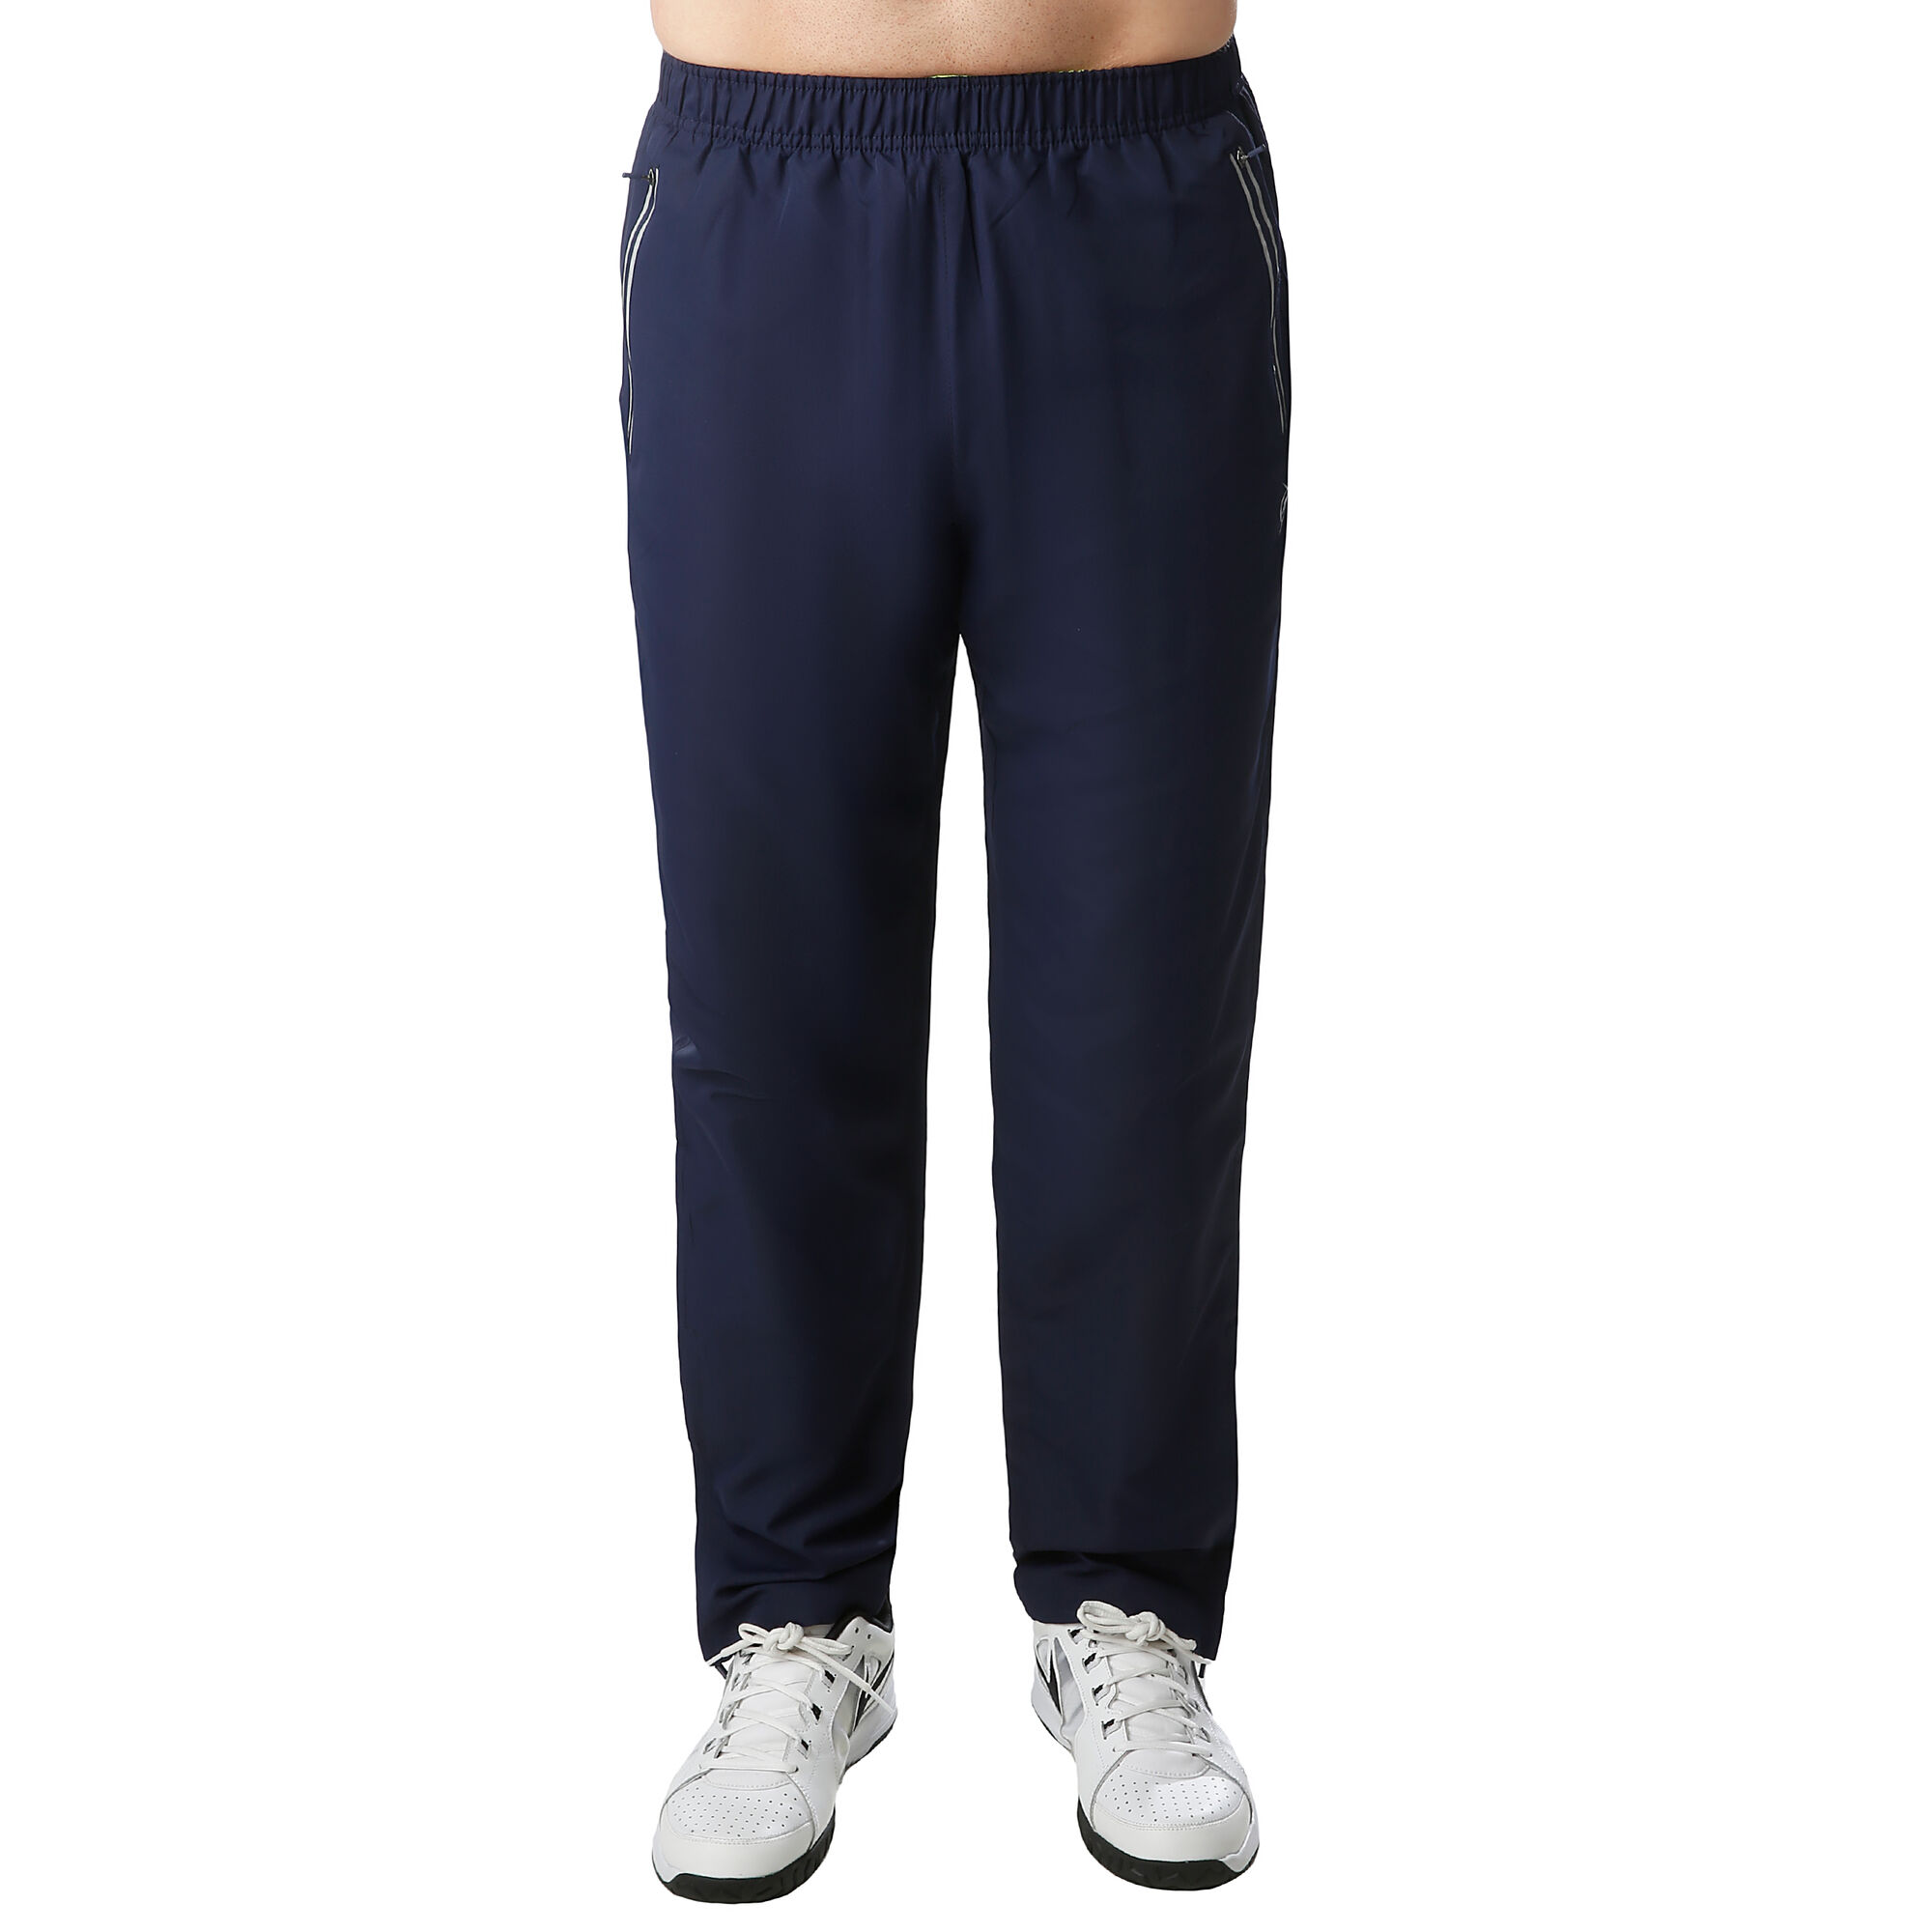 buy Dunlop Training Pants Men - Dark Blue, White online | Tennis-Point